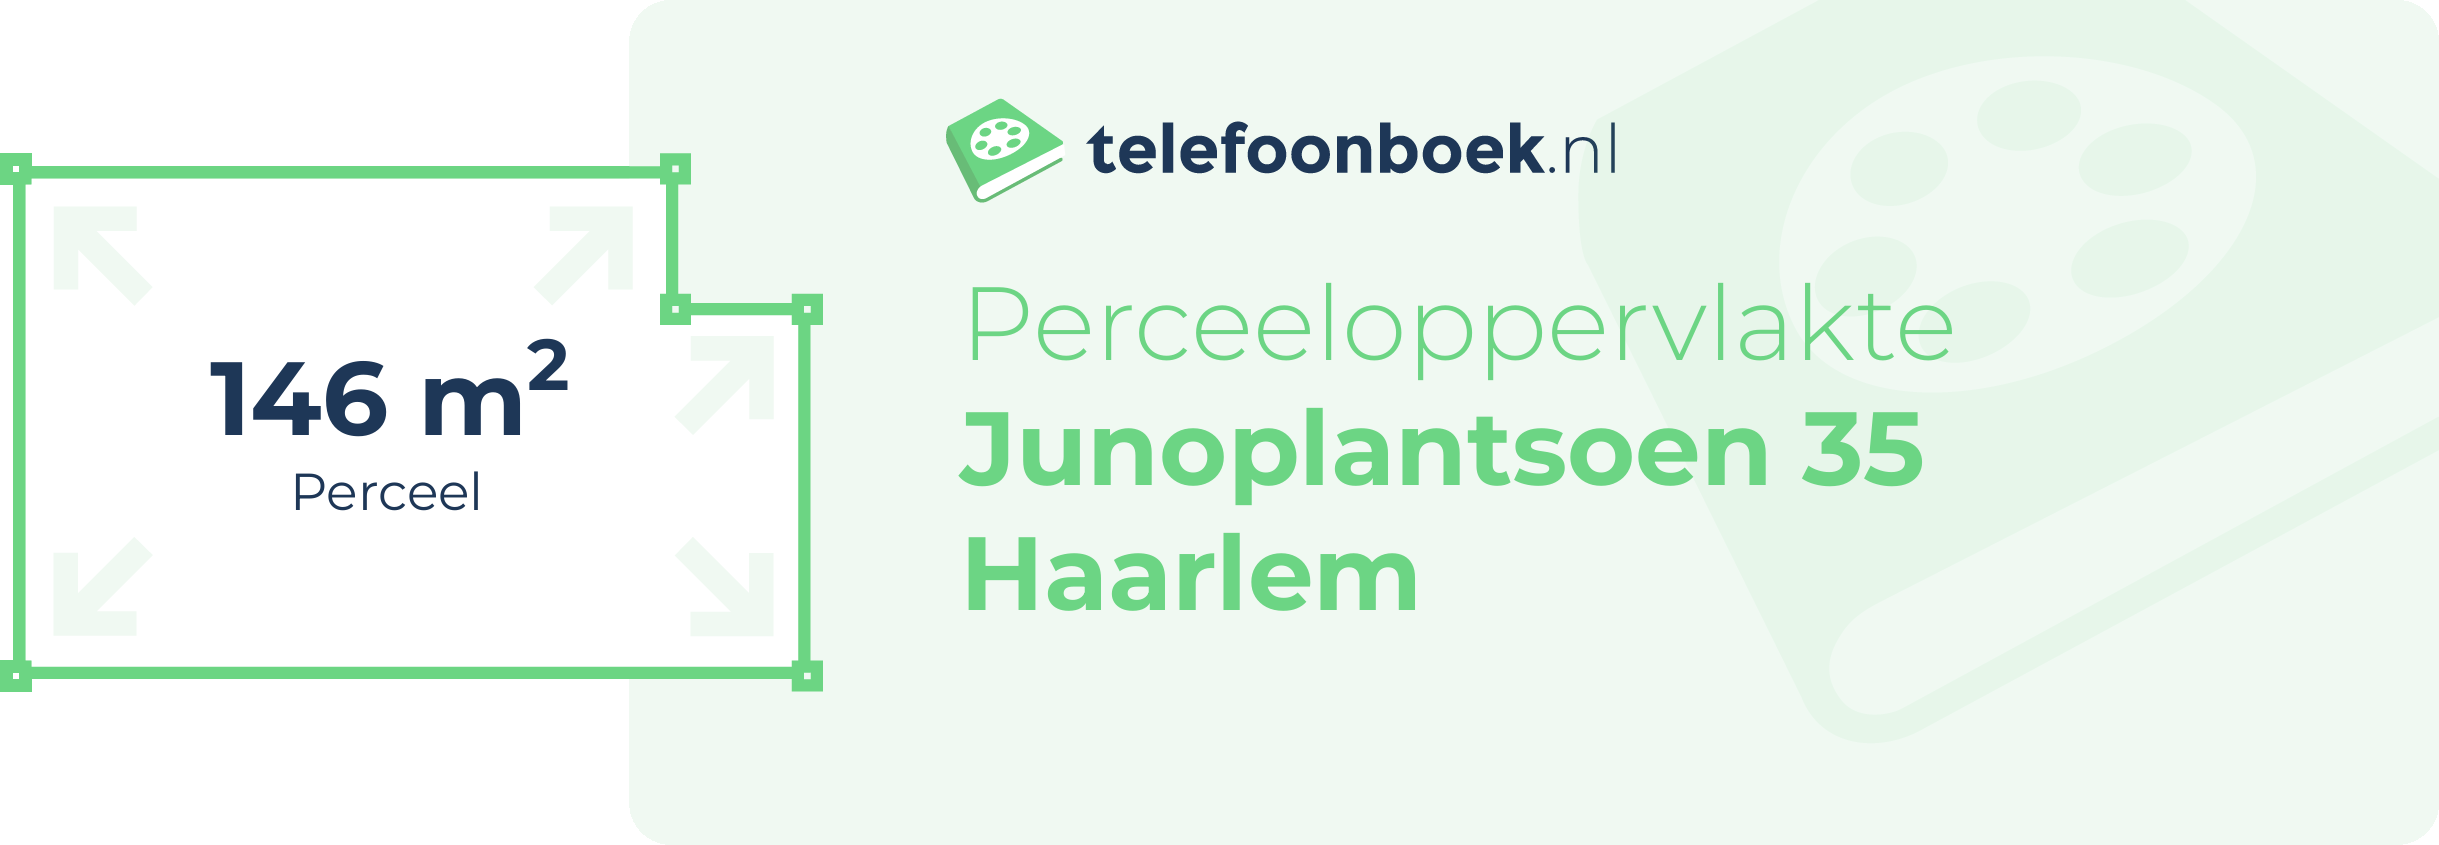 Perceeloppervlakte Junoplantsoen 35 Haarlem